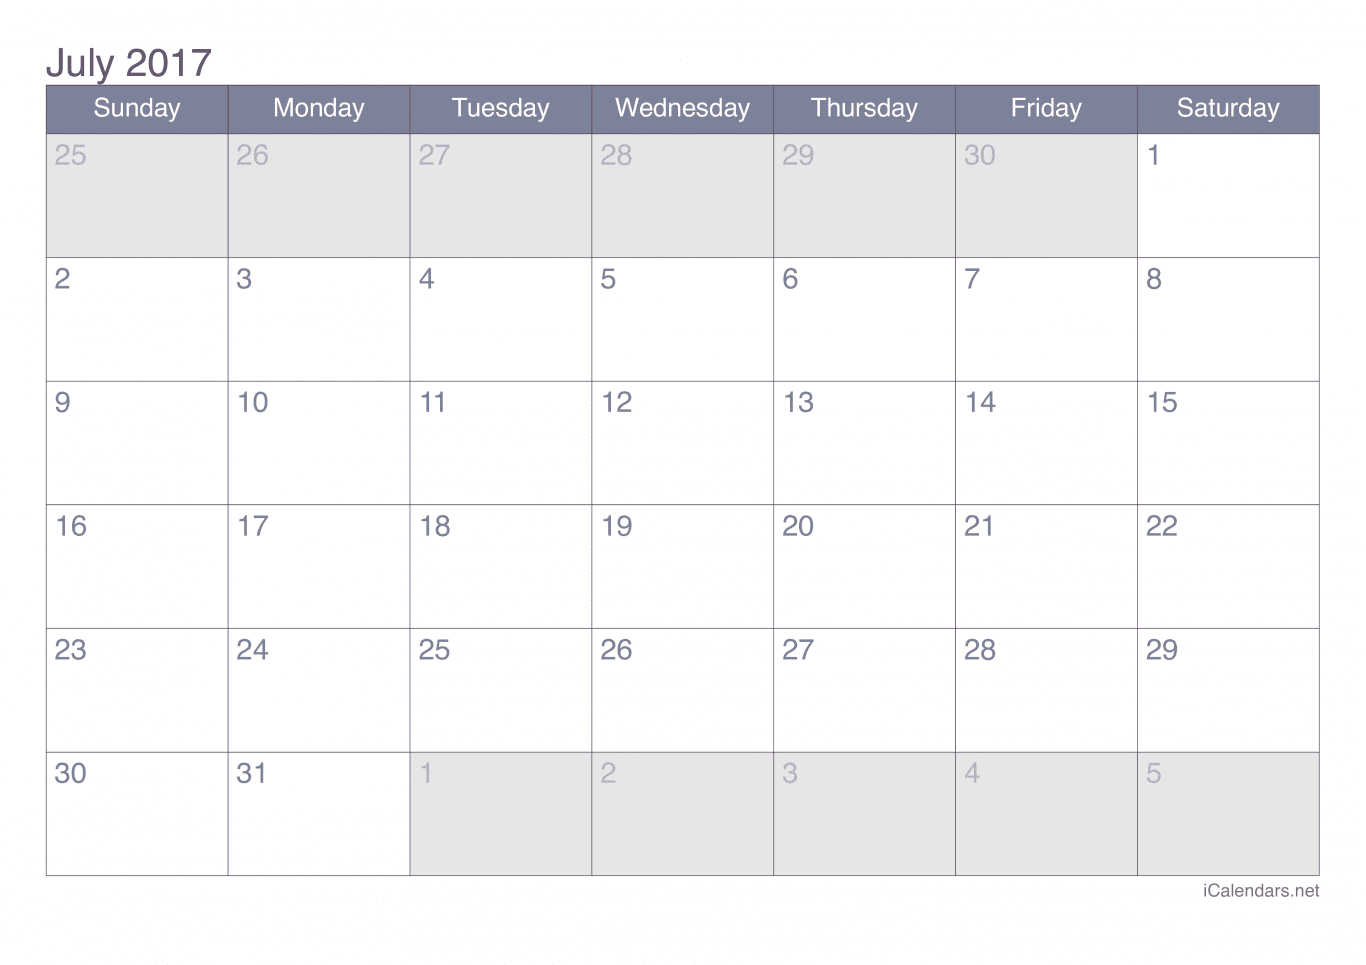 2017 July Calendar - Office